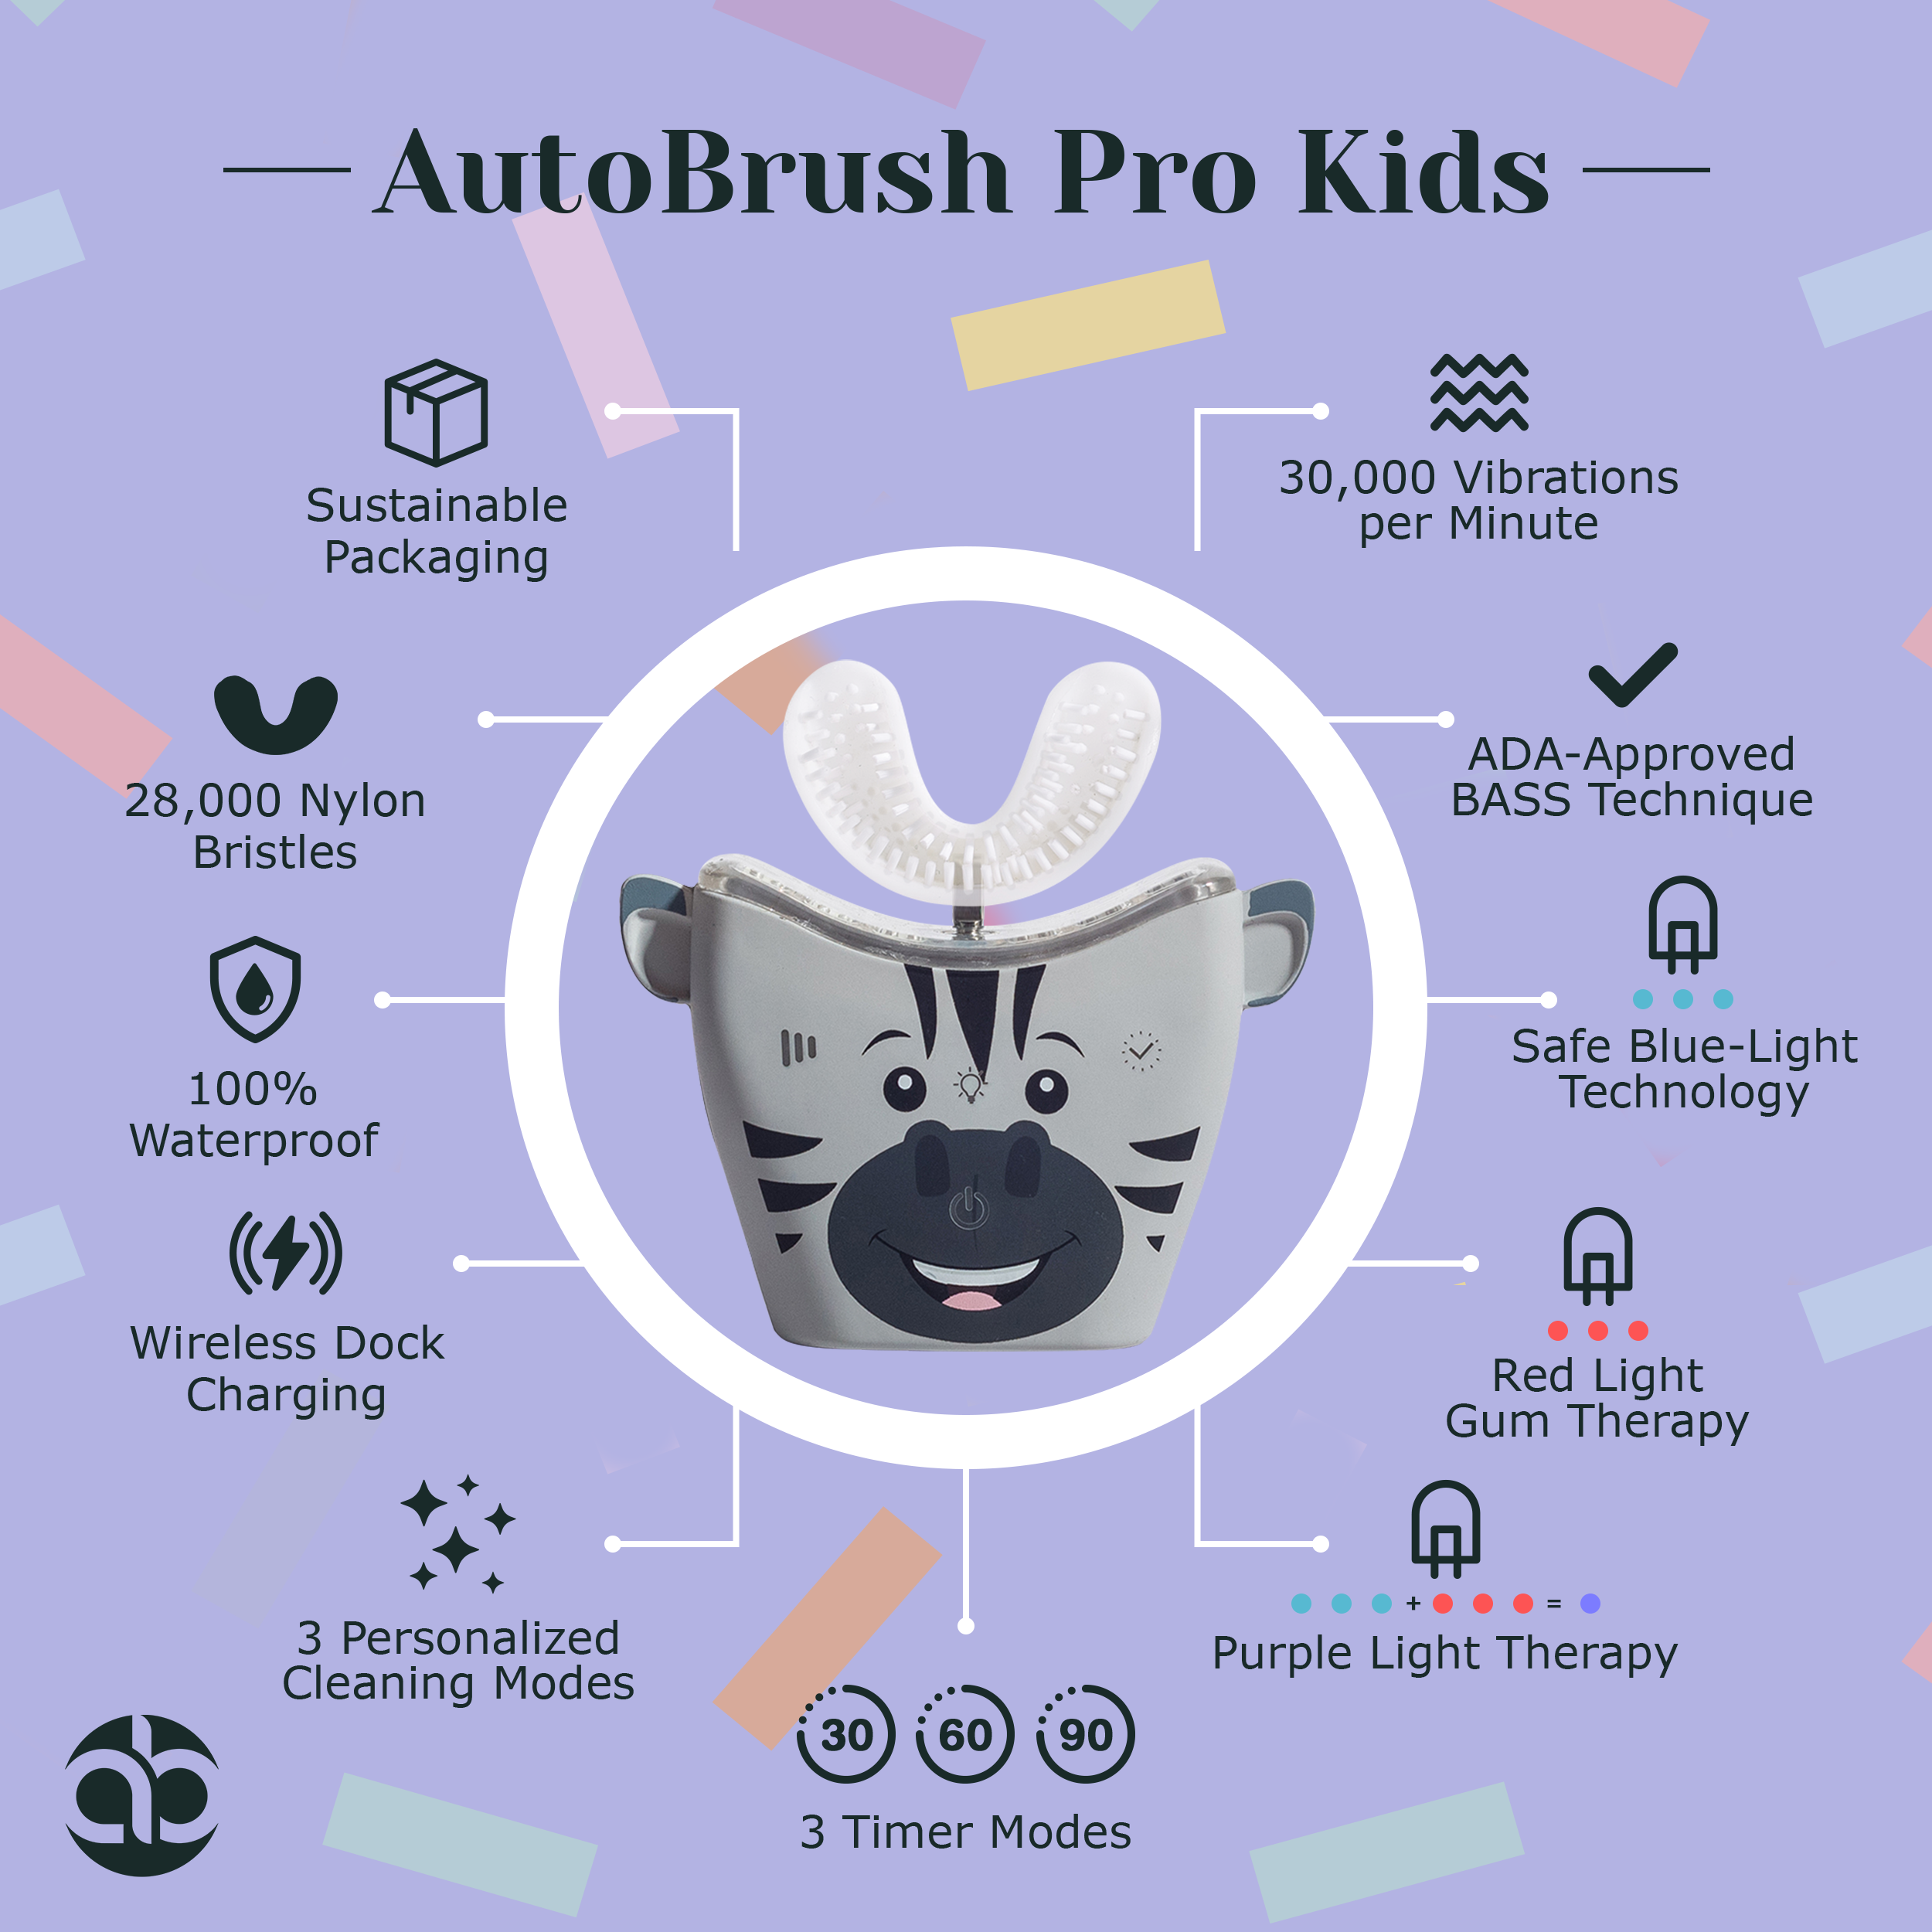 AutoBrush Pro Kids